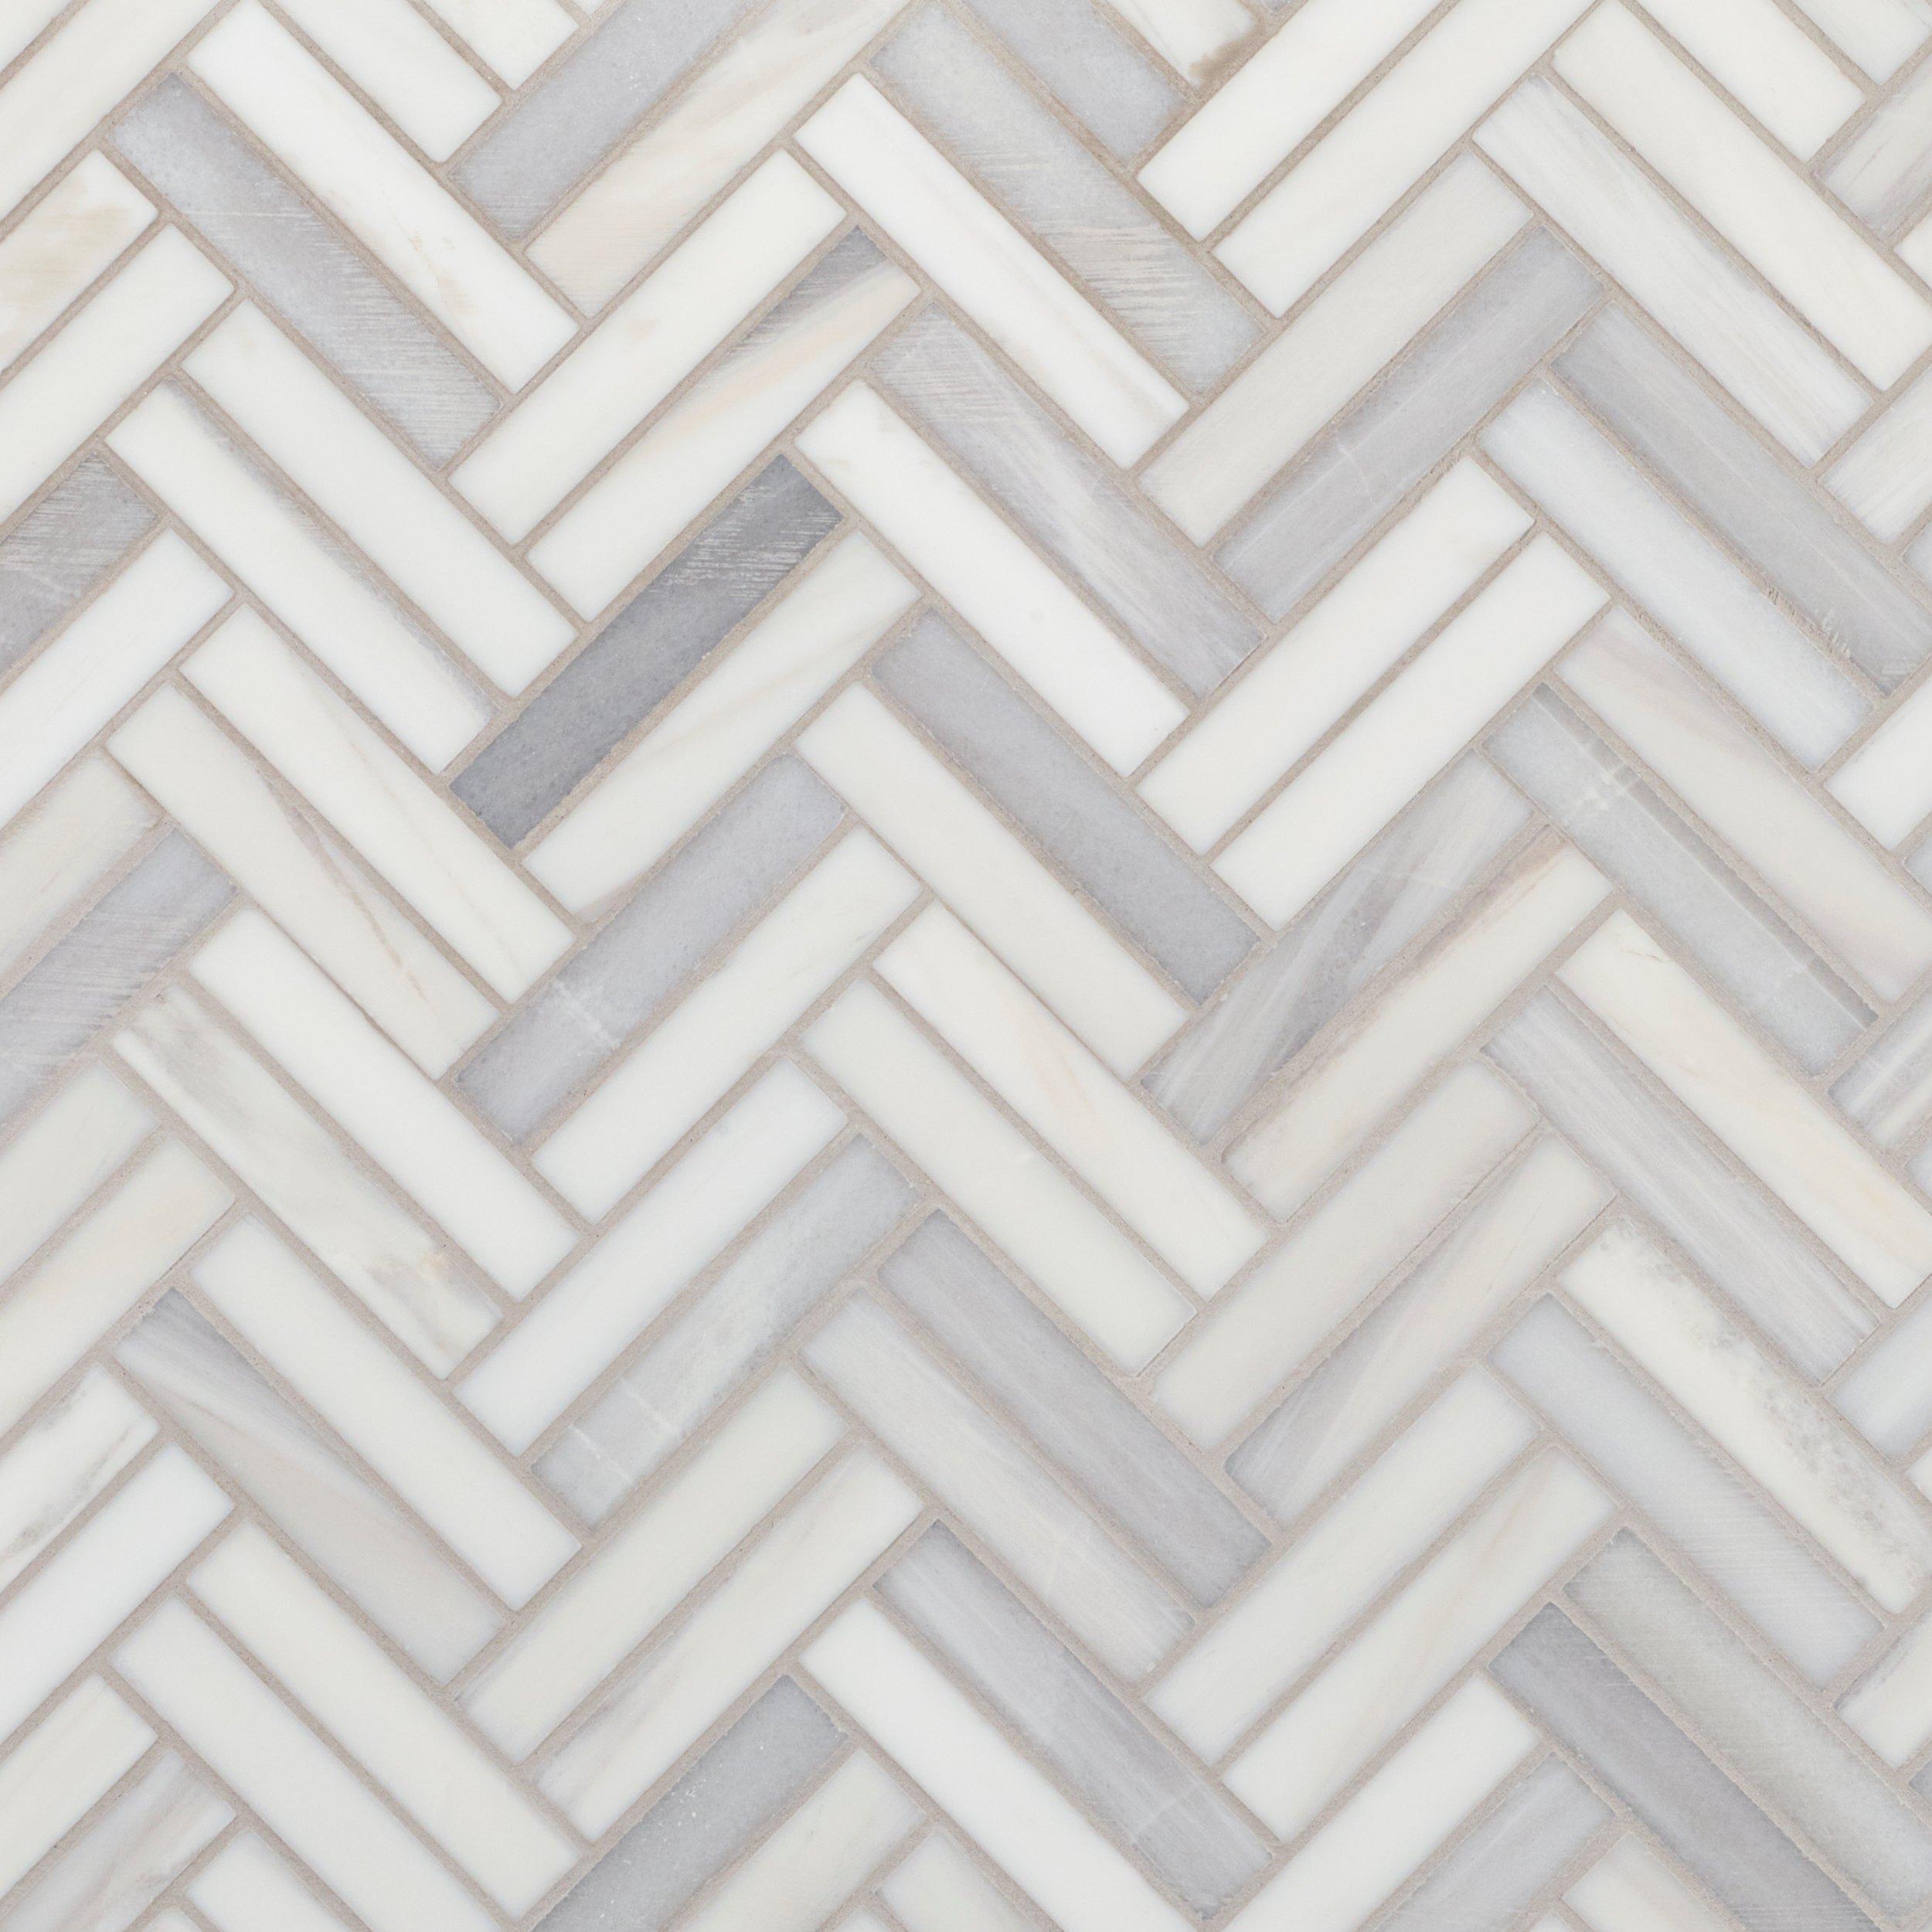 Bianco Venatino Double Herringbone Marble Mosaic